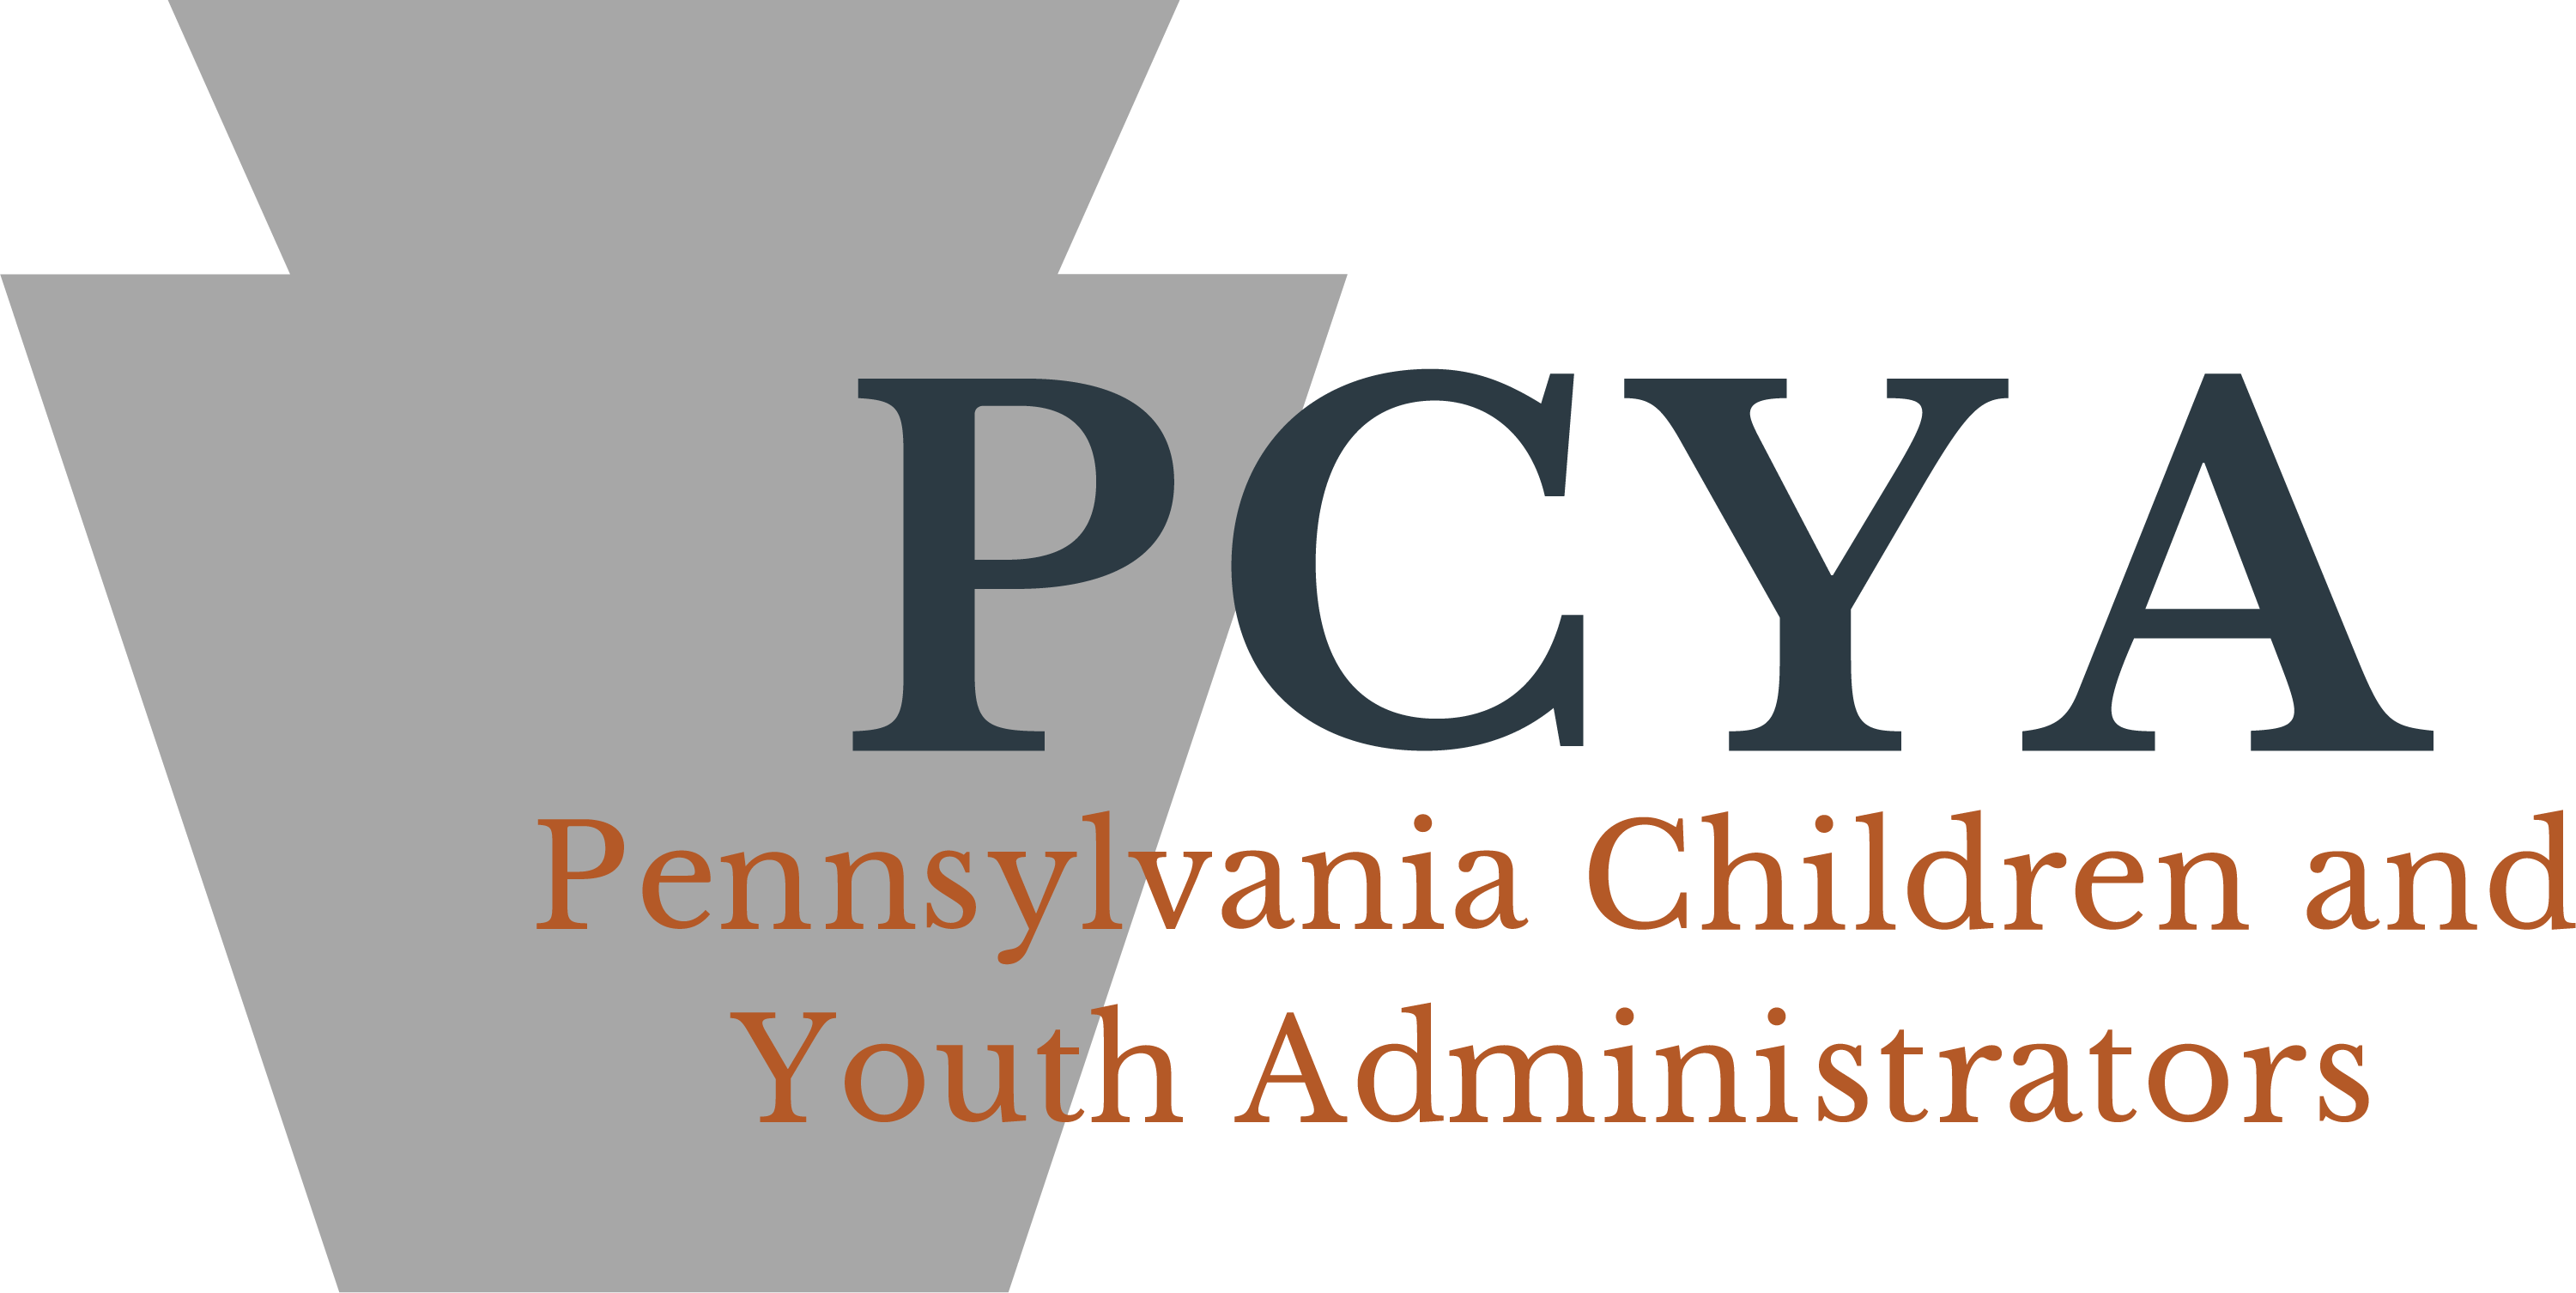 ennsylvania Children and Youth Administrators Logo